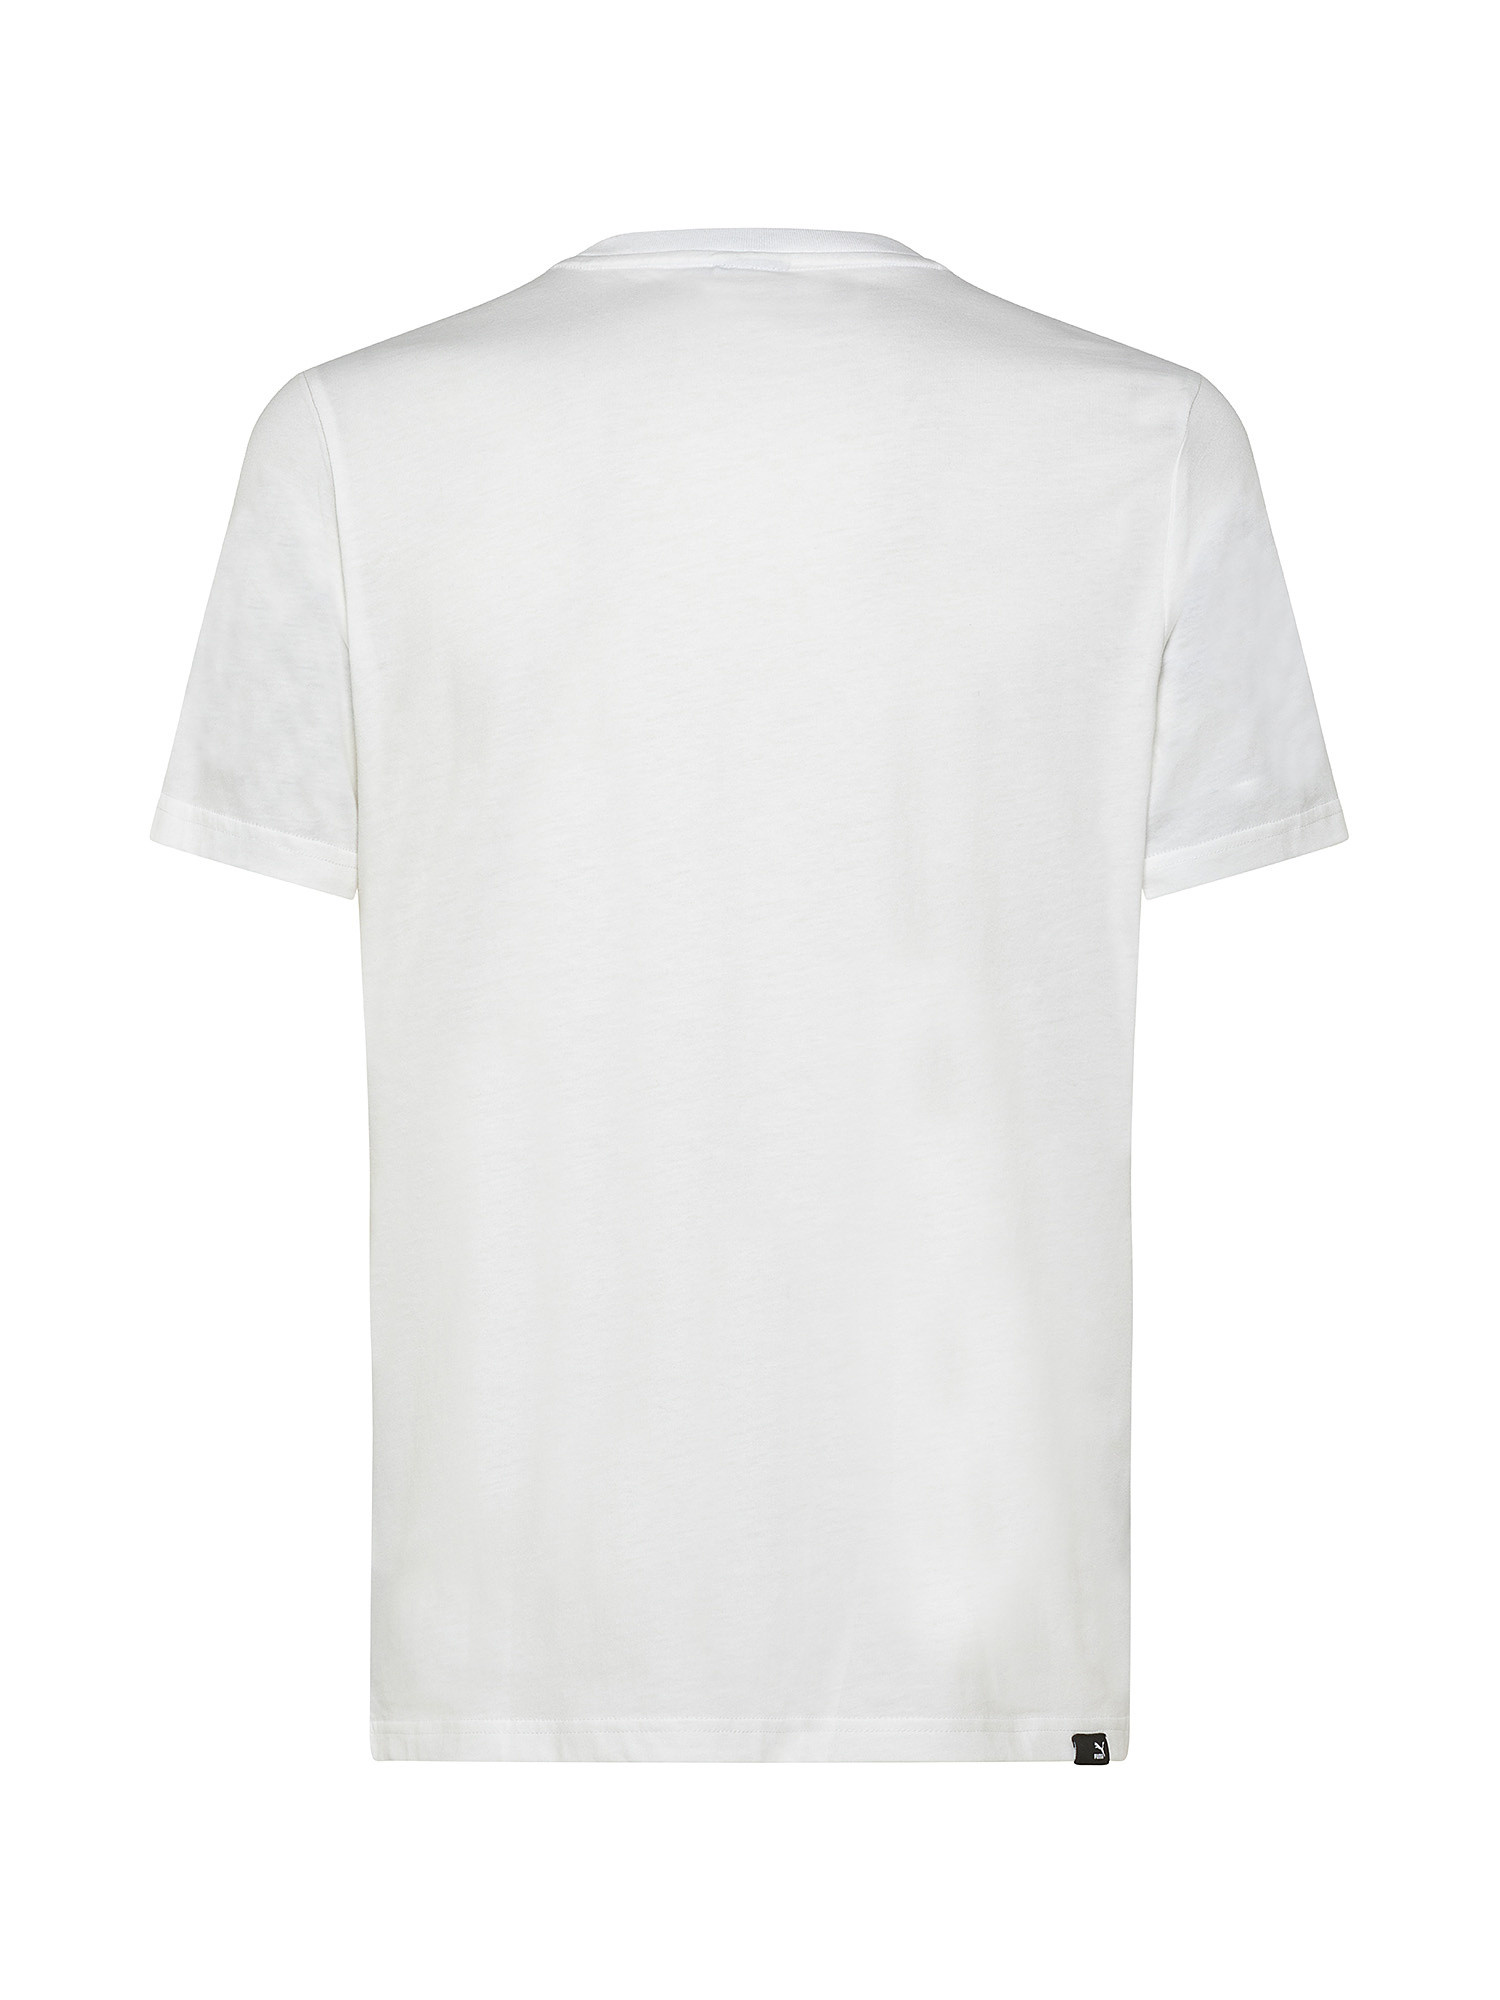 T-shirt with logo, White, large image number 1